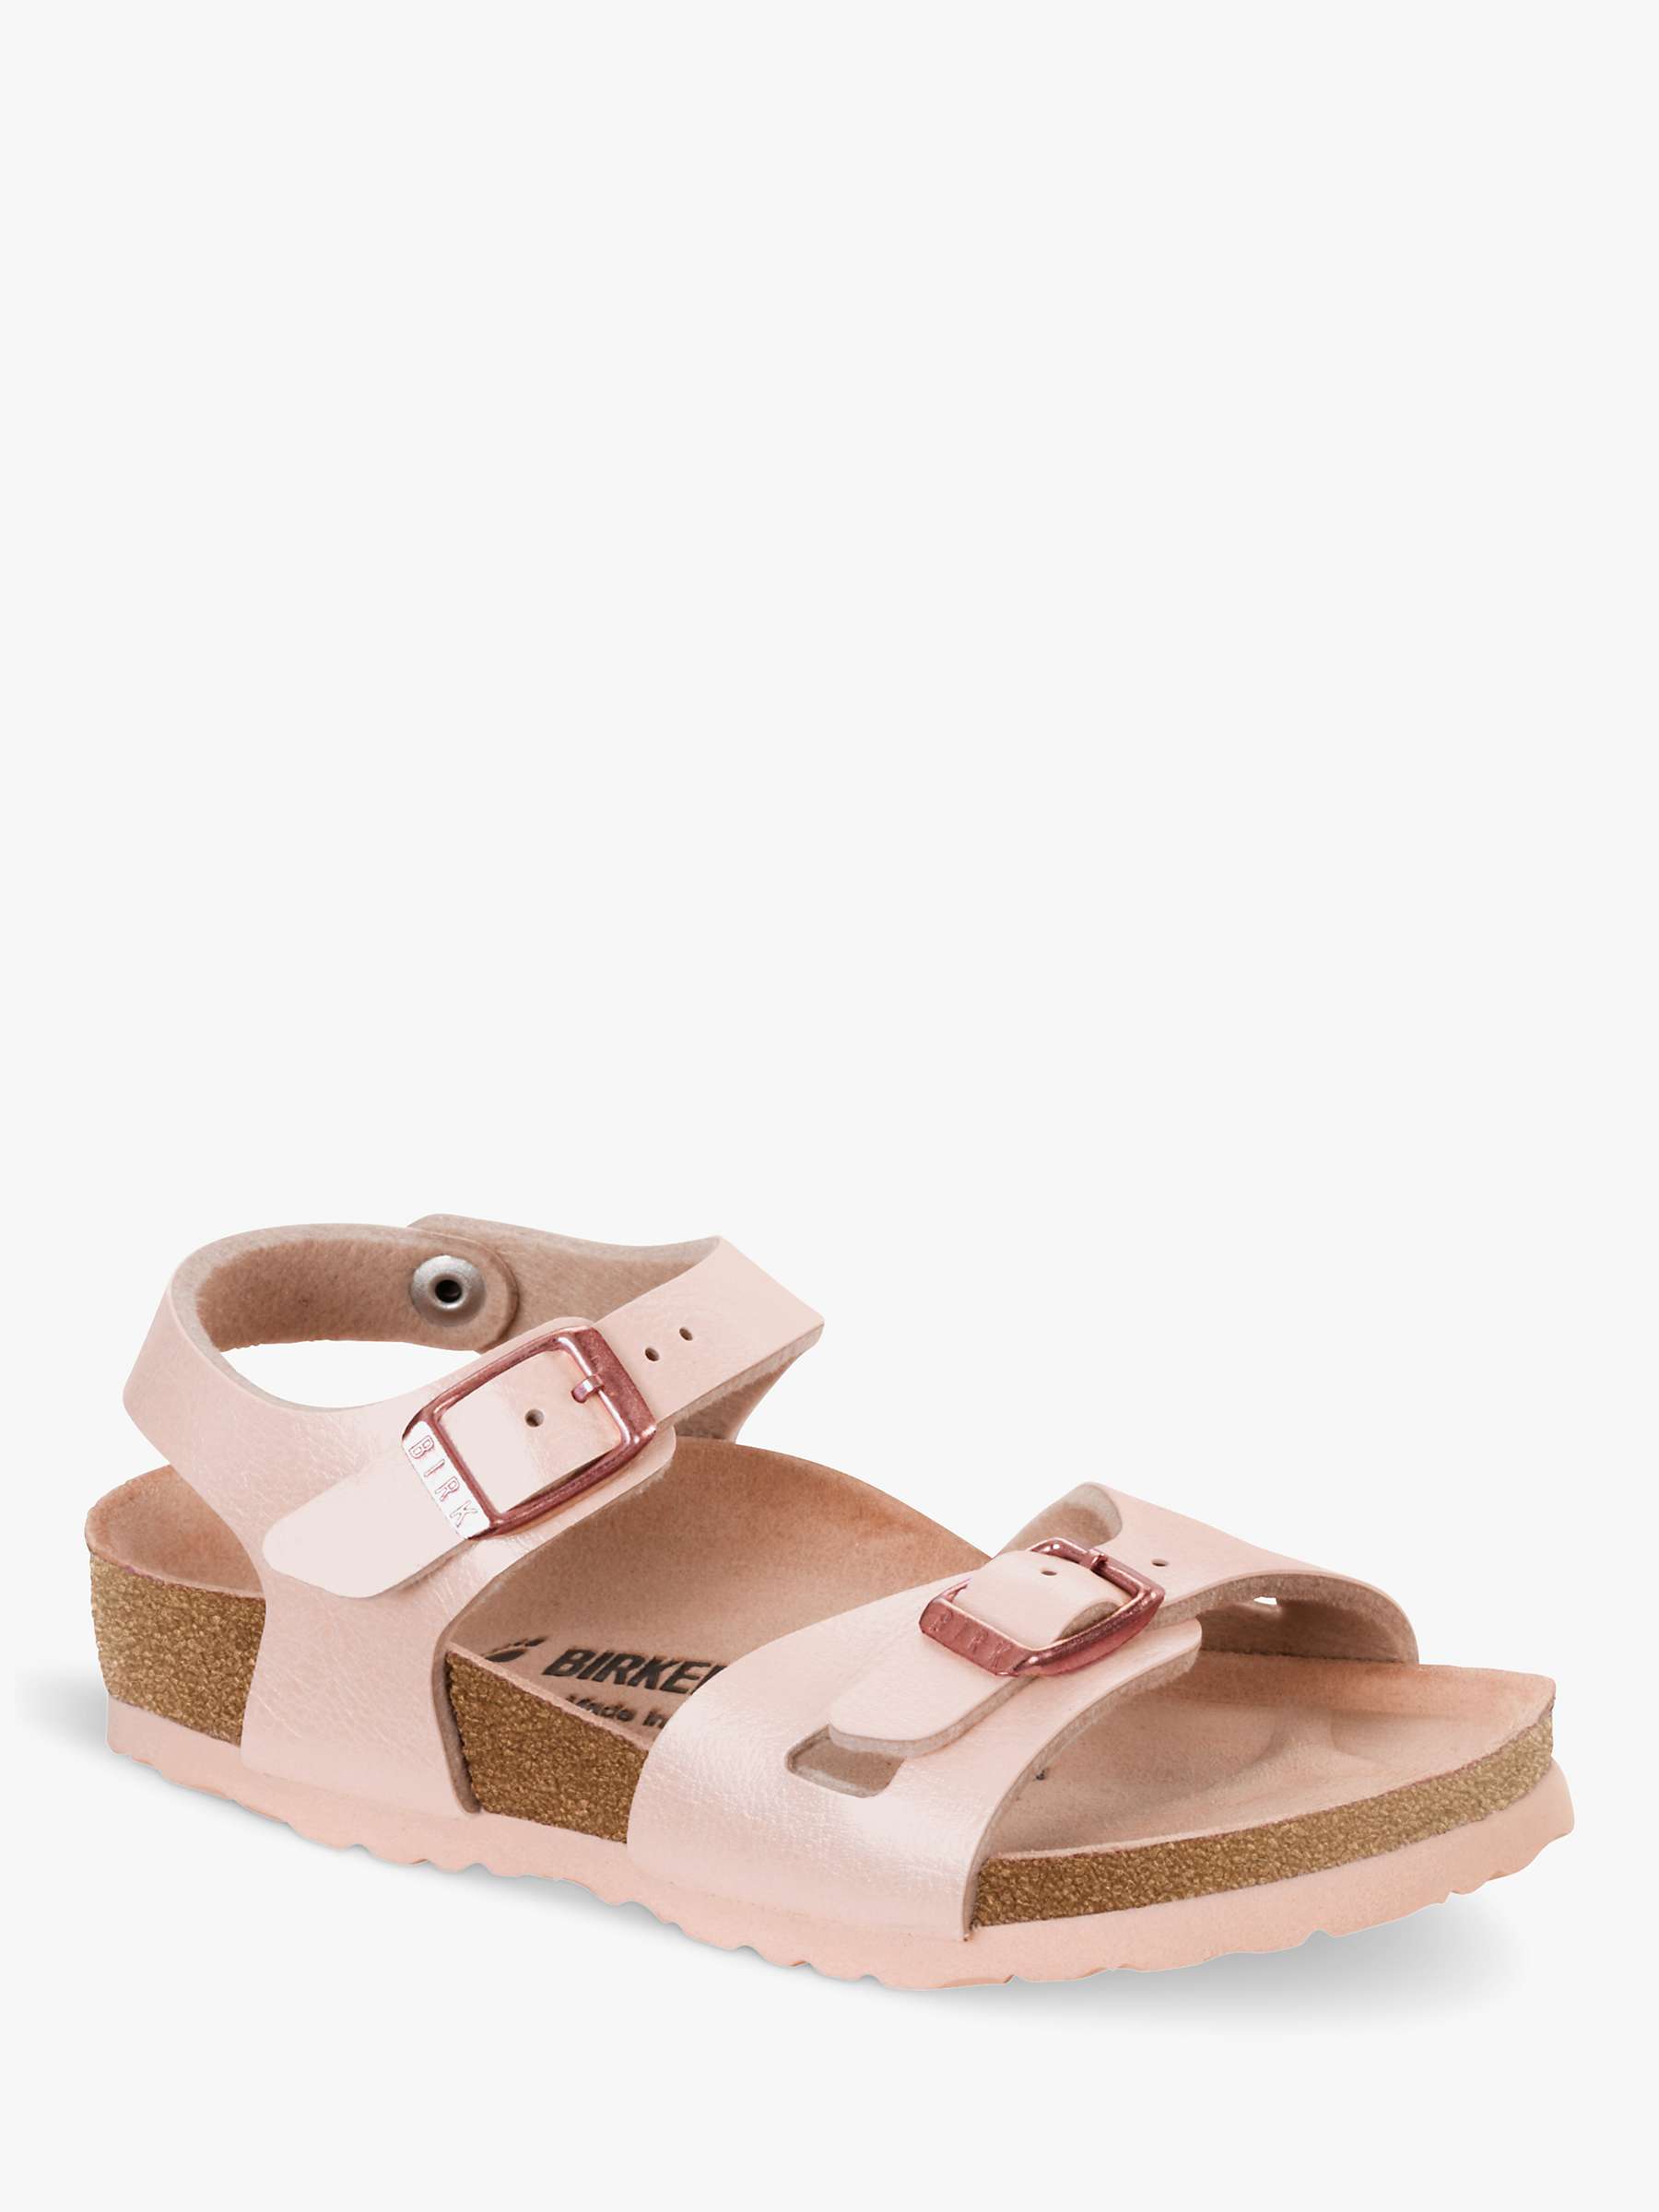 Buy Birkenstock Kids' Rio Sandals, Light Pink Online at johnlewis.com